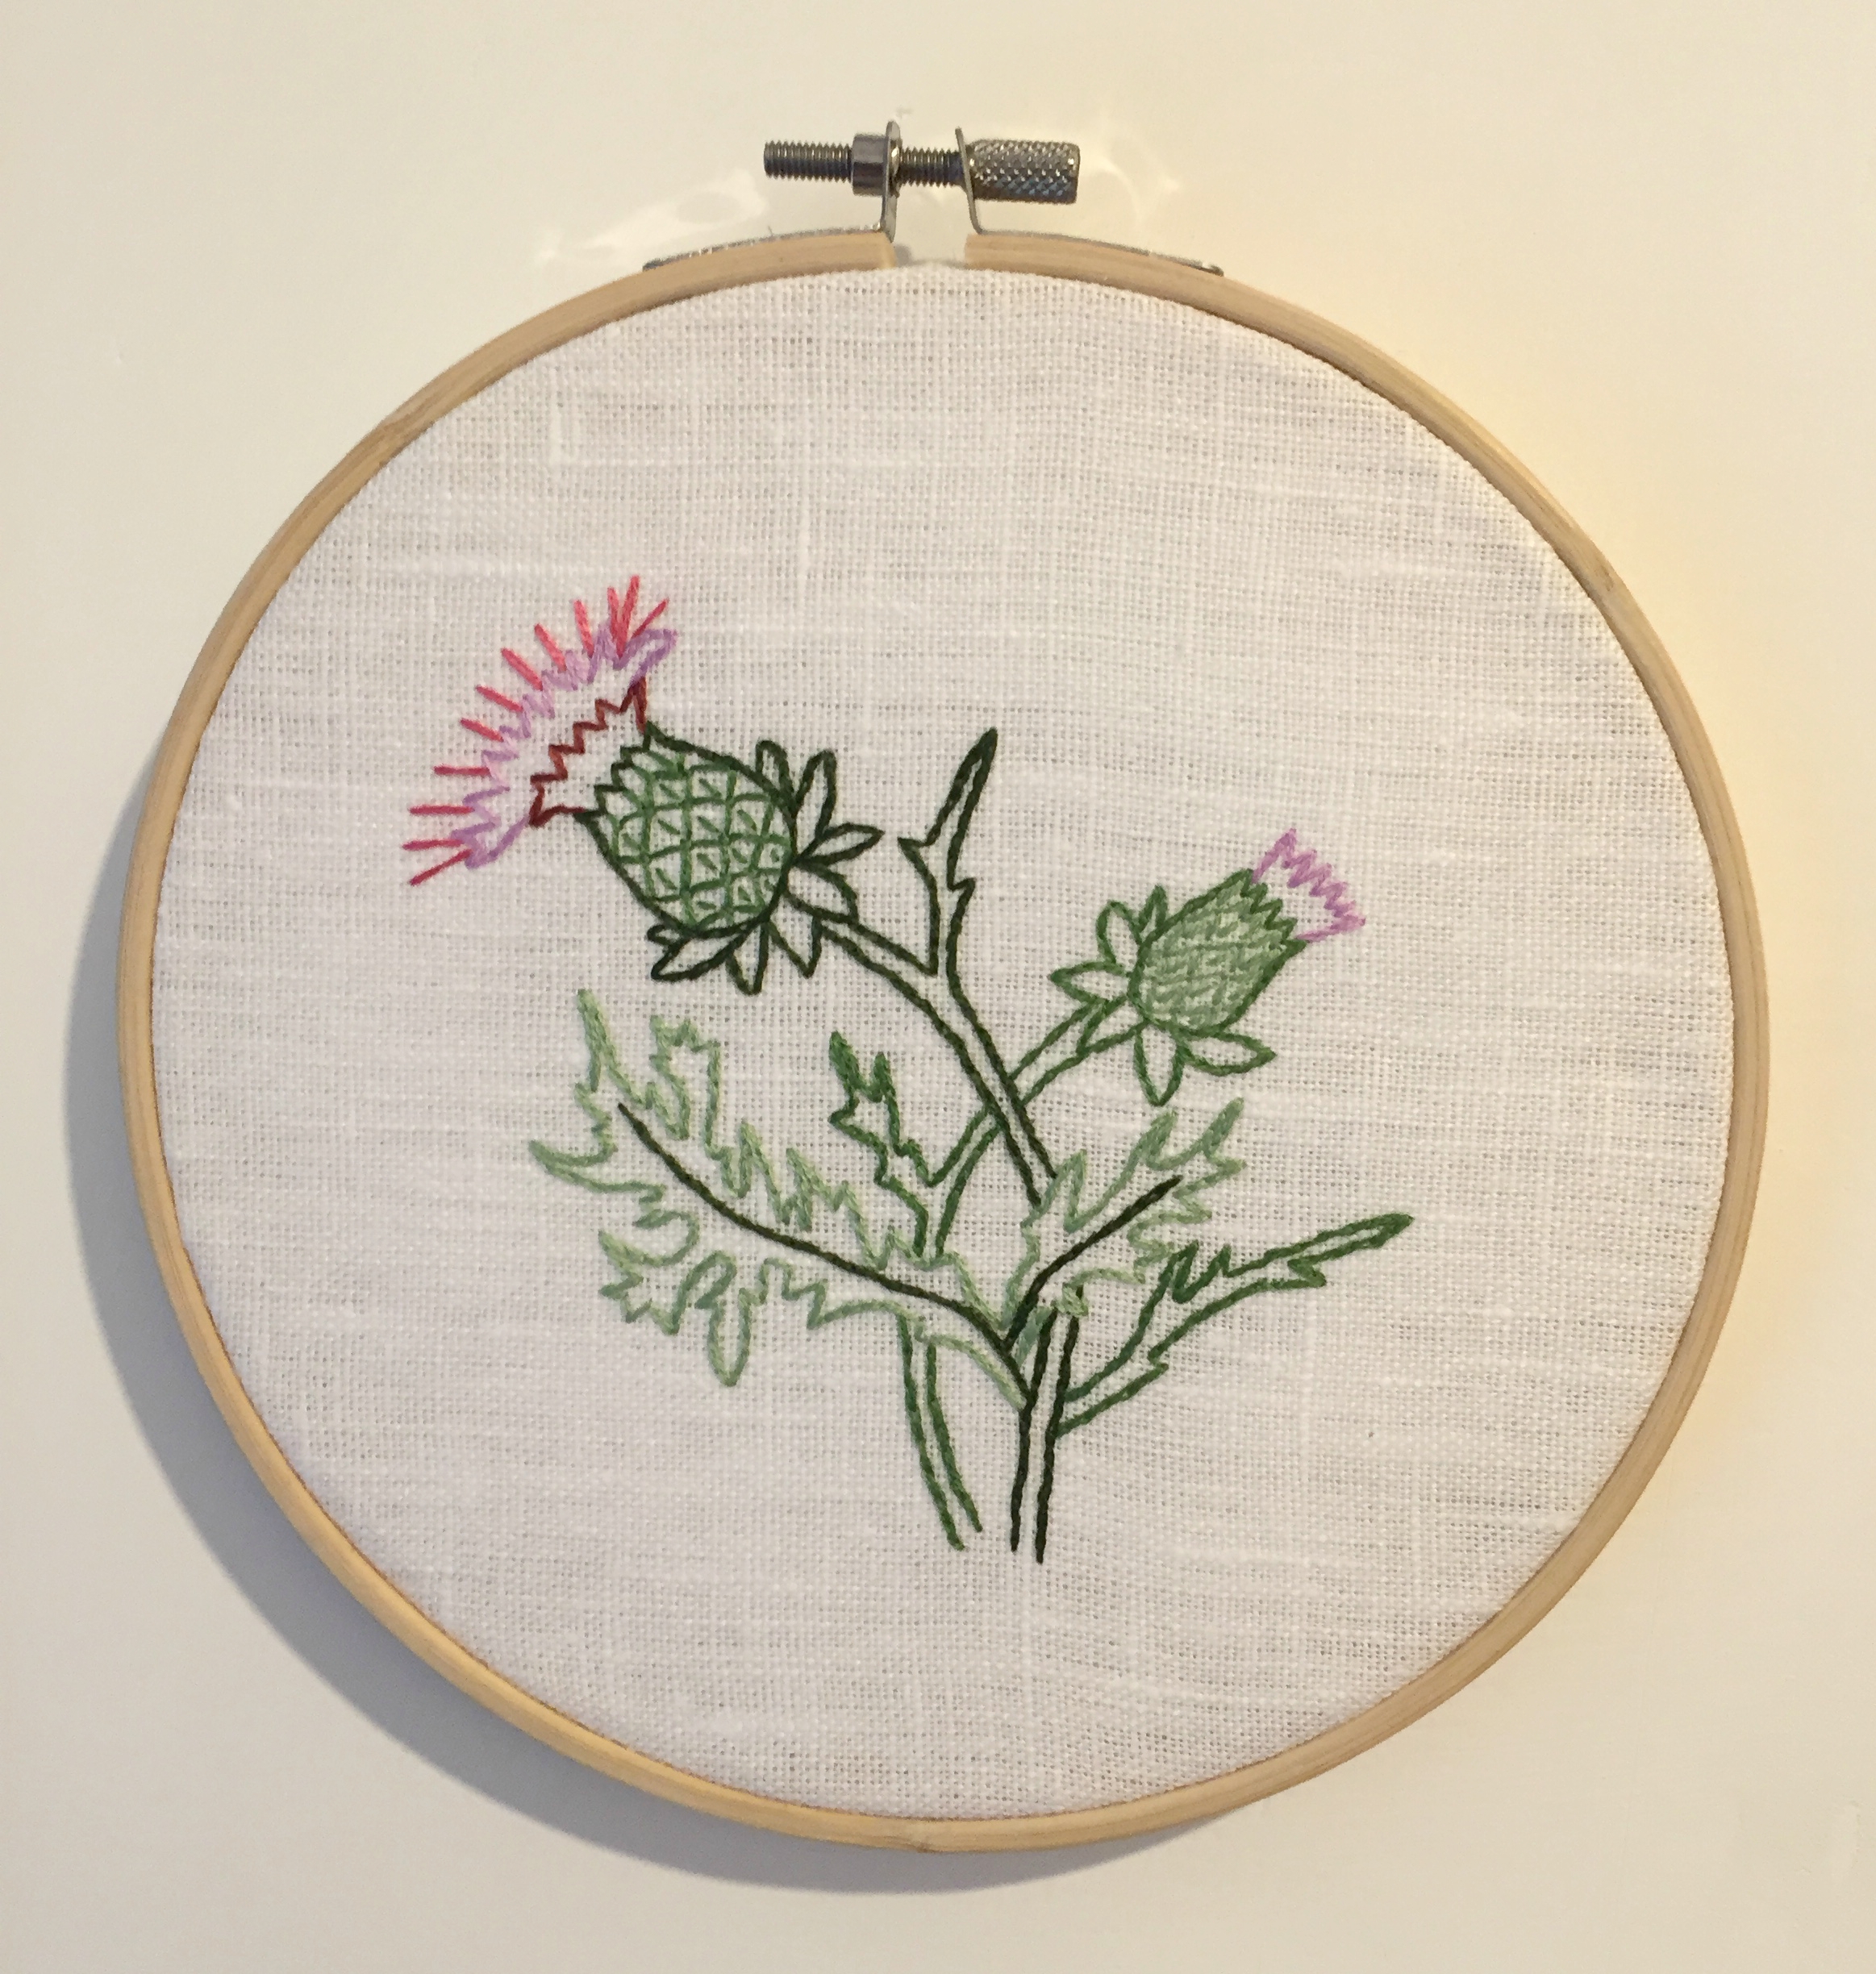 Scotch darning stitch - Practical Embroidery